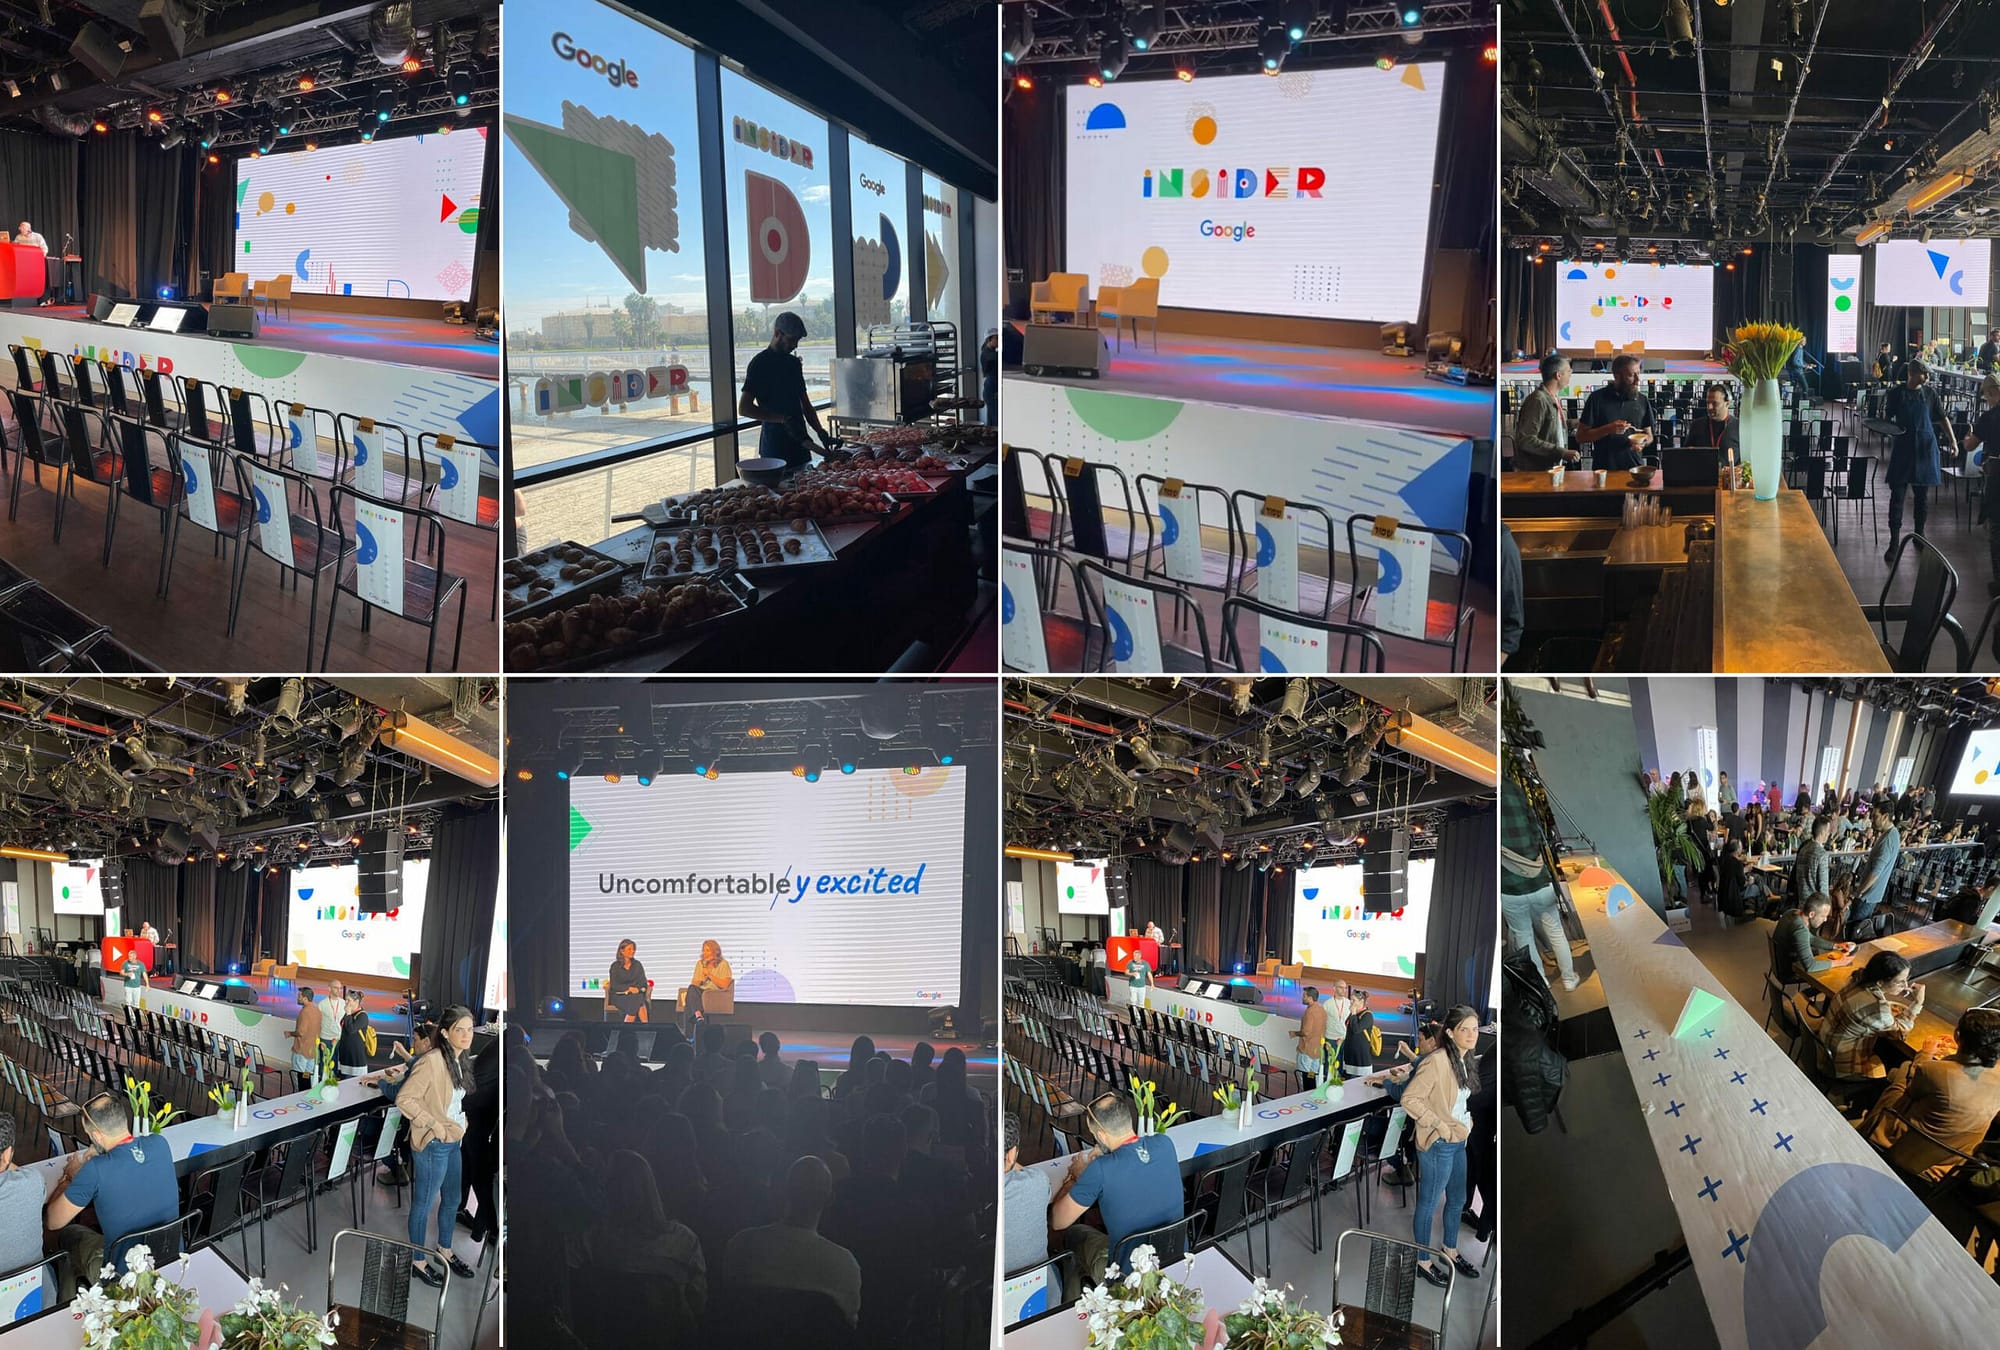 Google insider event branding - hello design - branding tech and startups